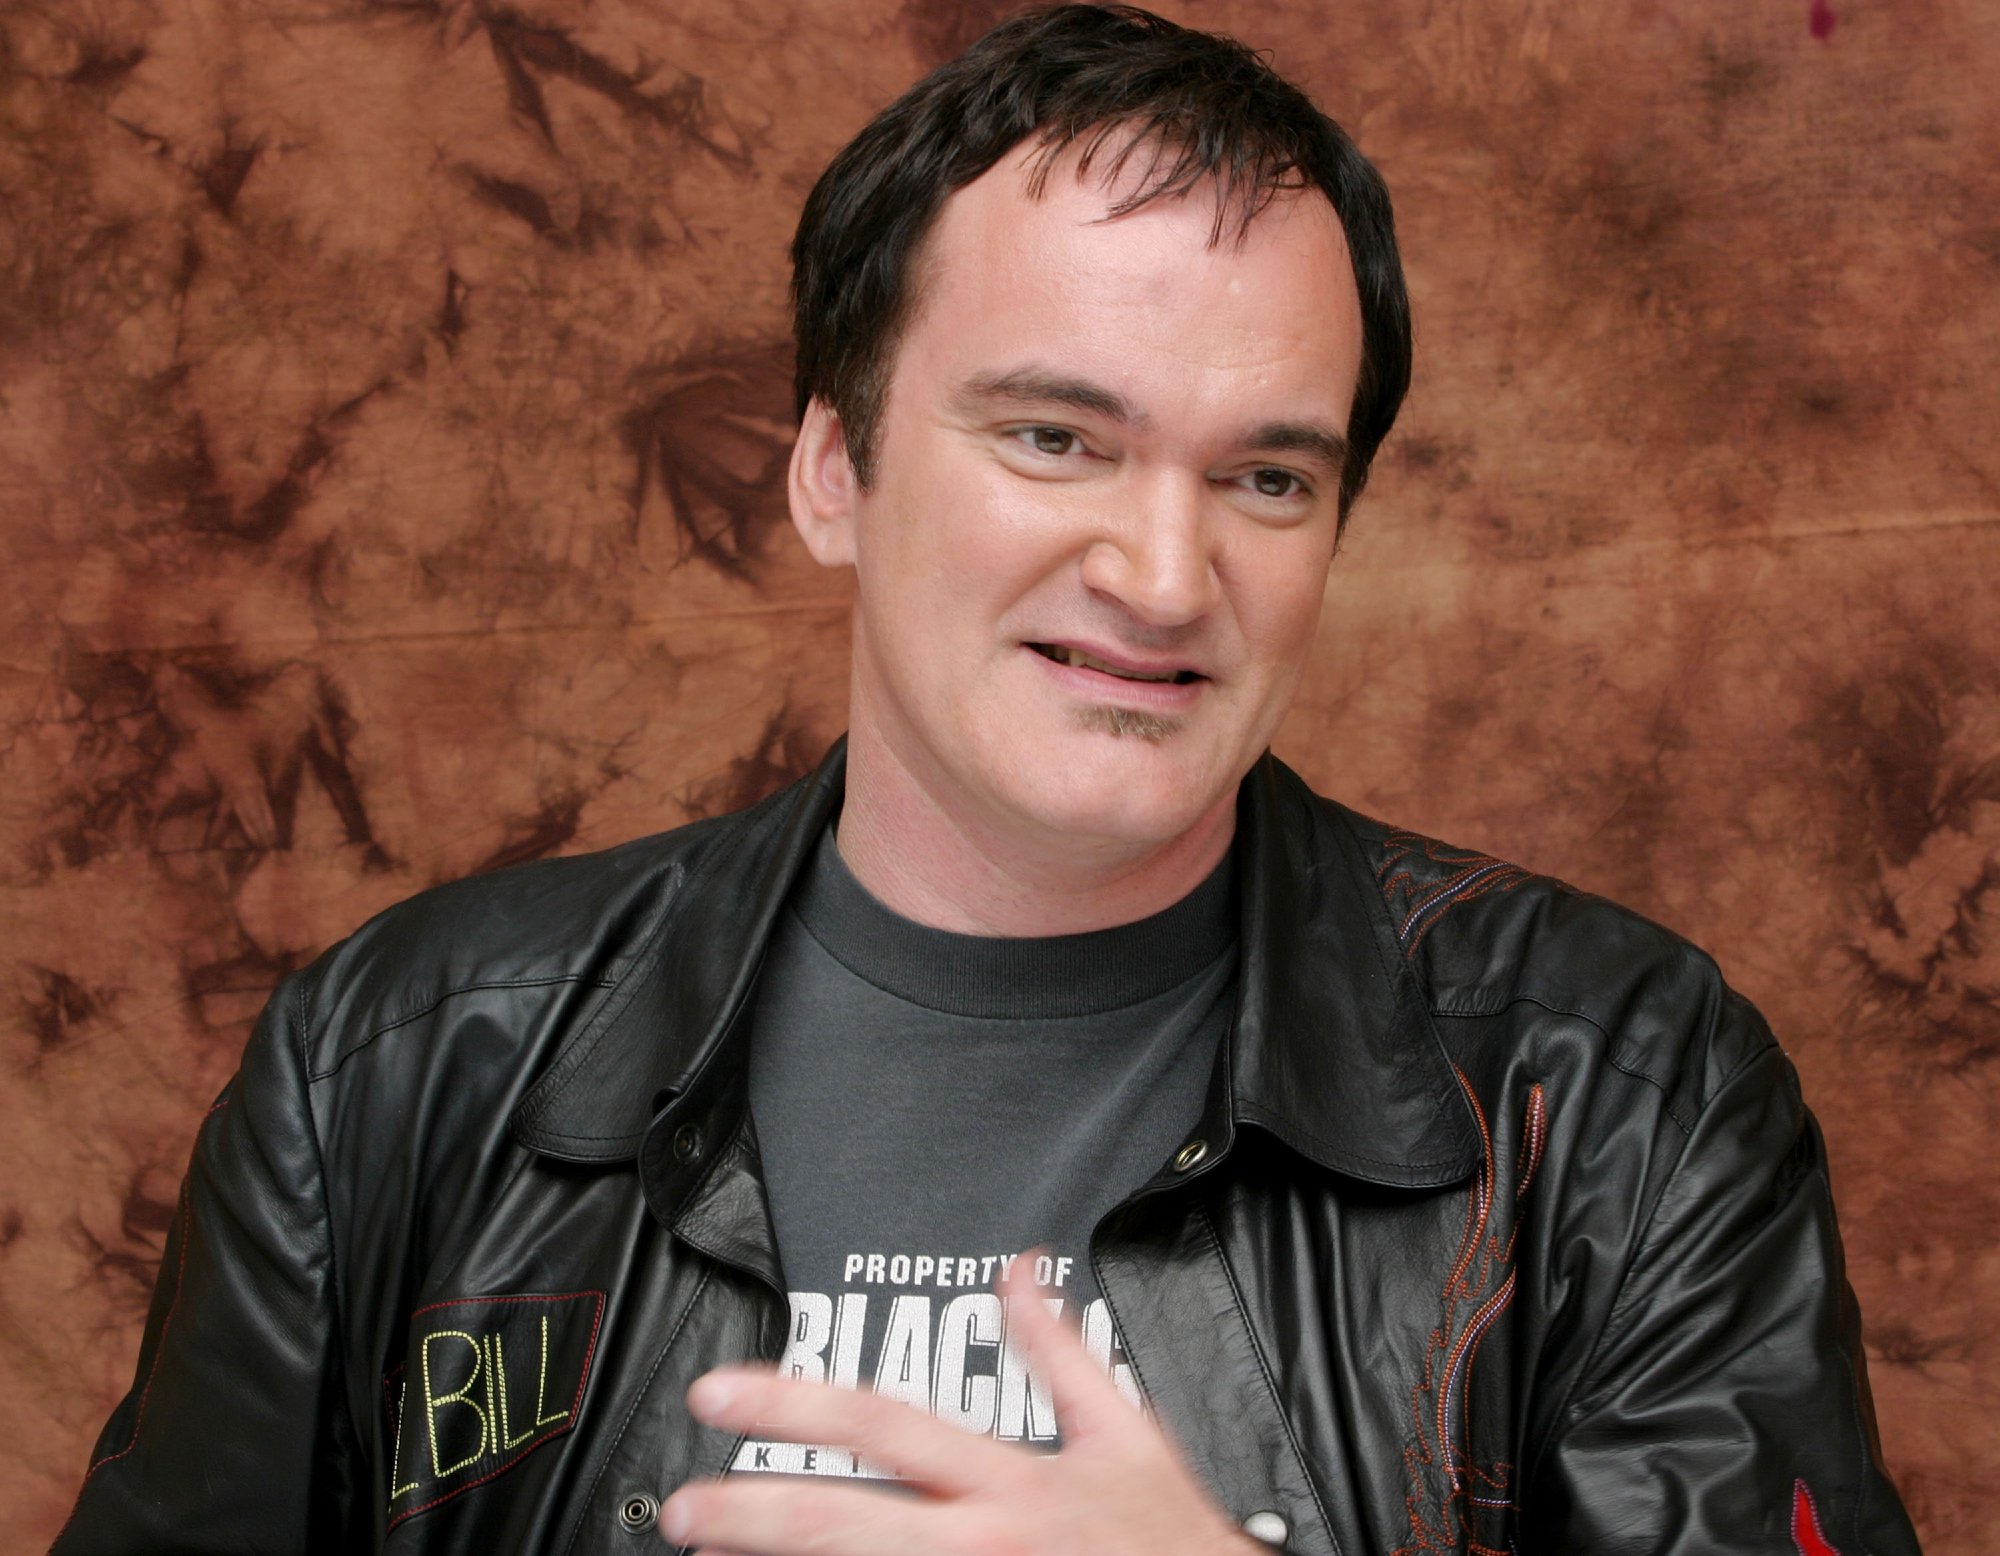 'Kill Bill' filmmaker Quentin Tarantino at a press conference wearing a leather jacket